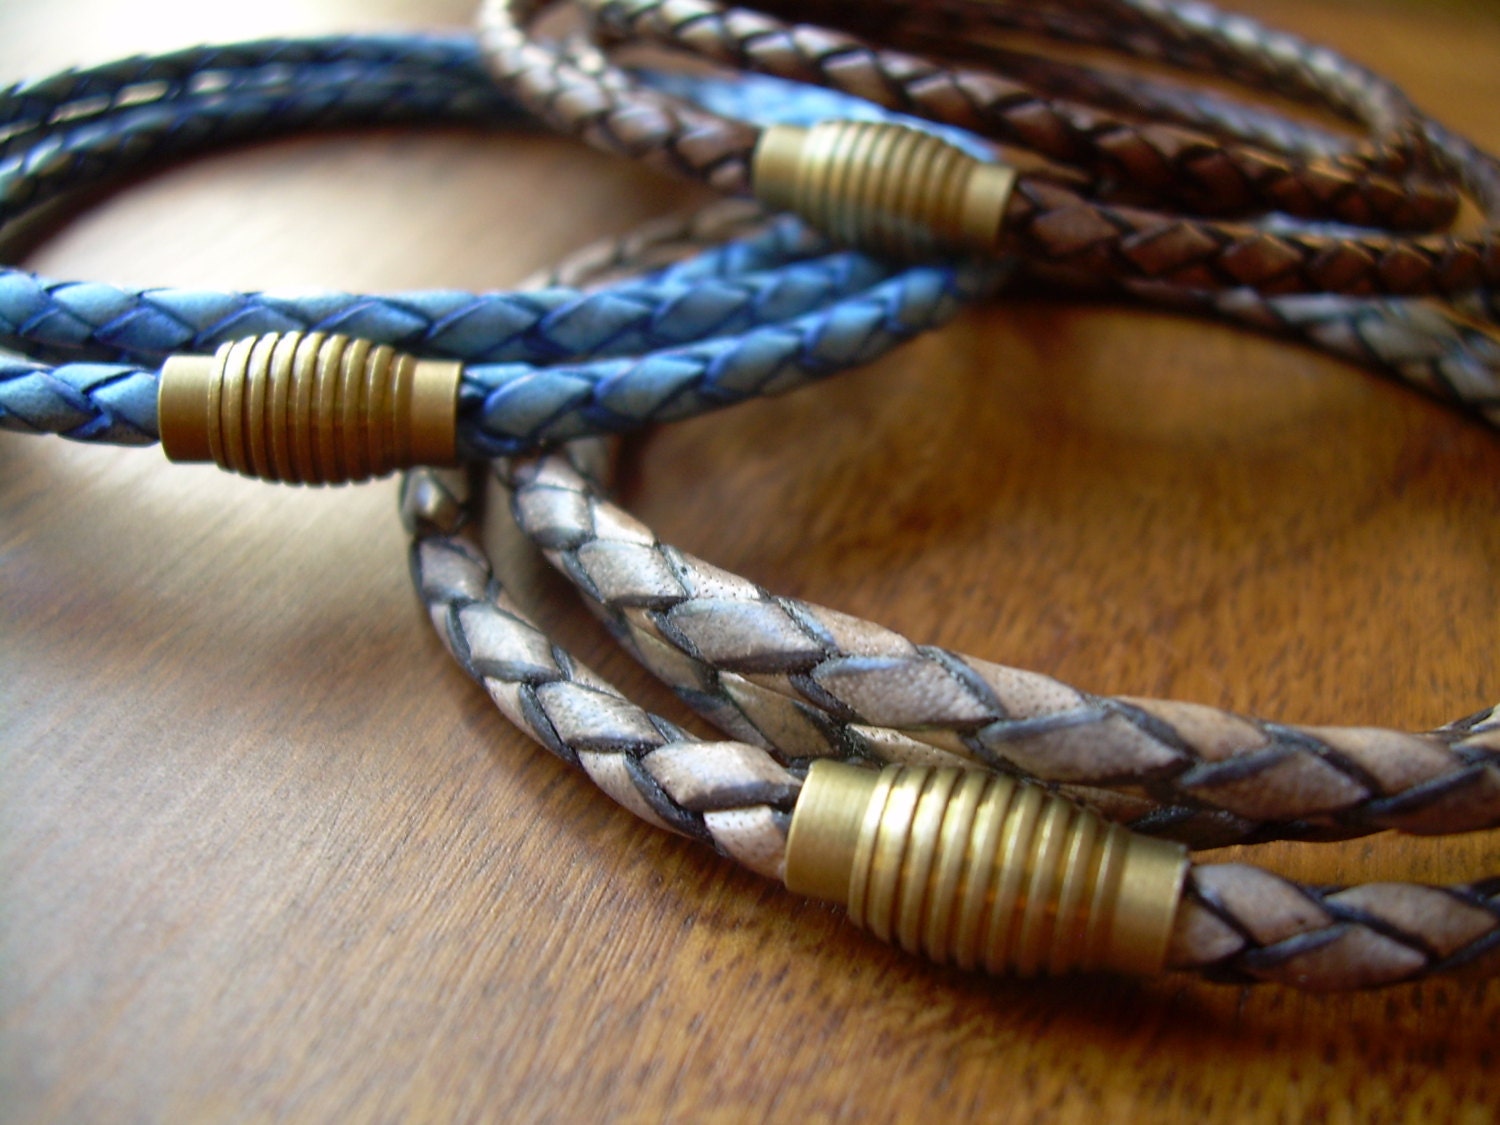 Men's Braided Leather Bracelet · Black/Blue Braided · Stainless Steel · Wrap Shiluette · 21 cm · Jewelry Accessory Gift · Marcus · A Few Wood Men